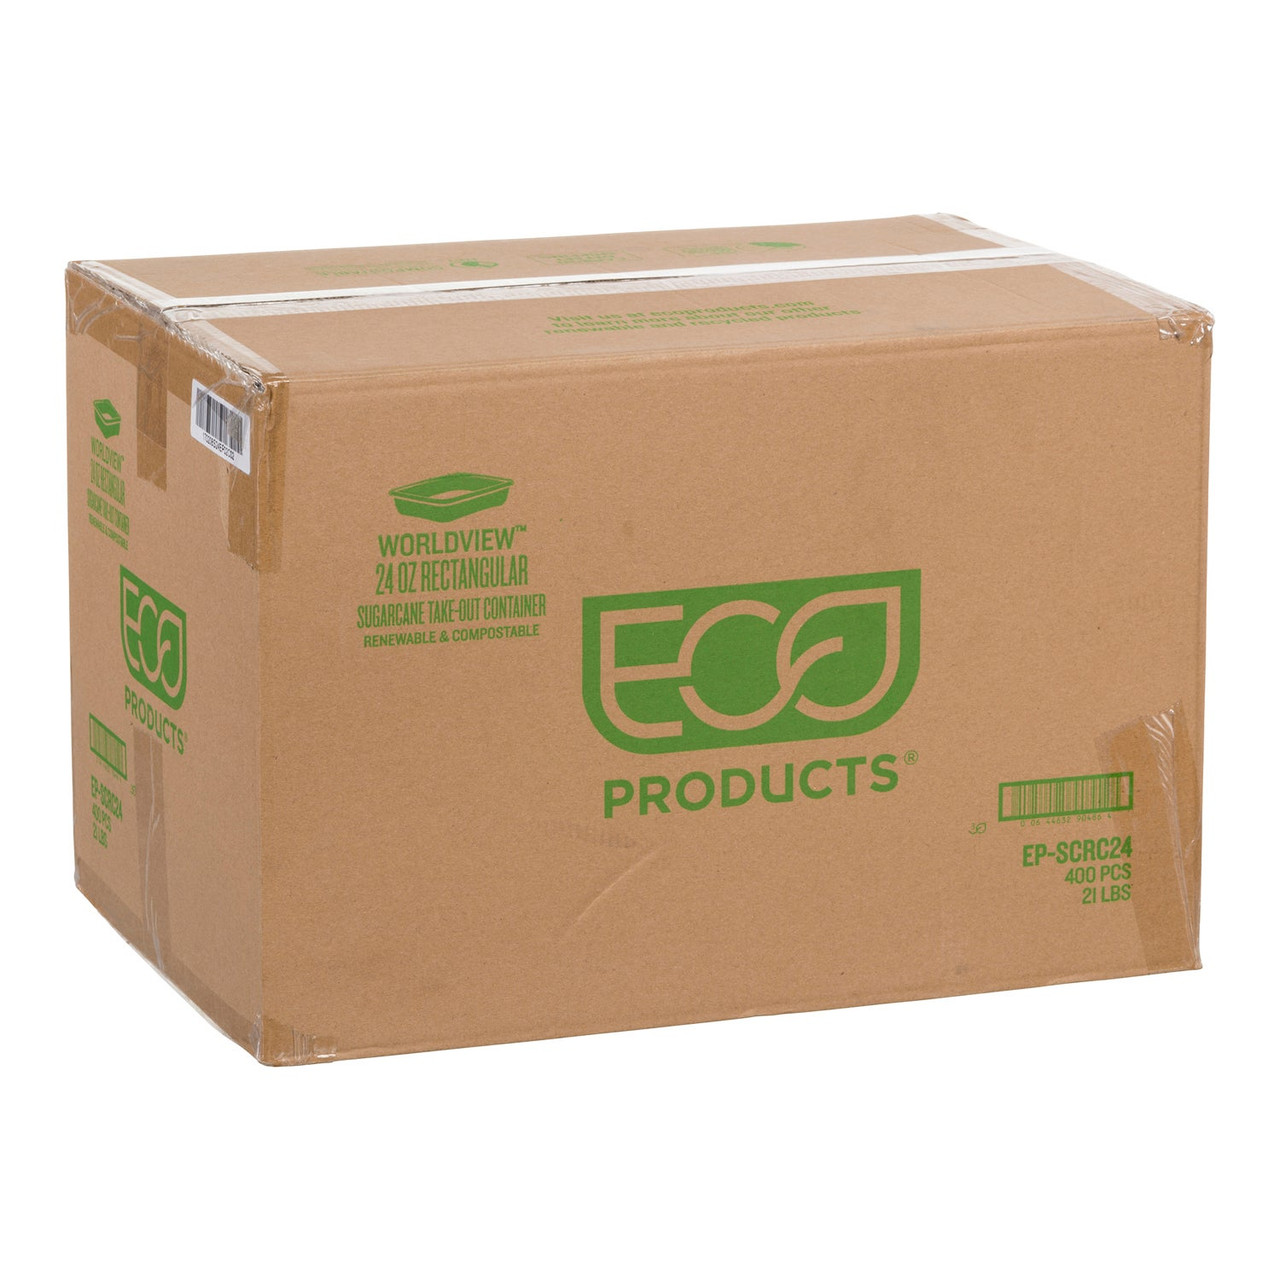 Worldview 24oz Rectangular White Bagasse Paper Containers, Ecology Friendly | 50UN/Unit, 8 Units/Case